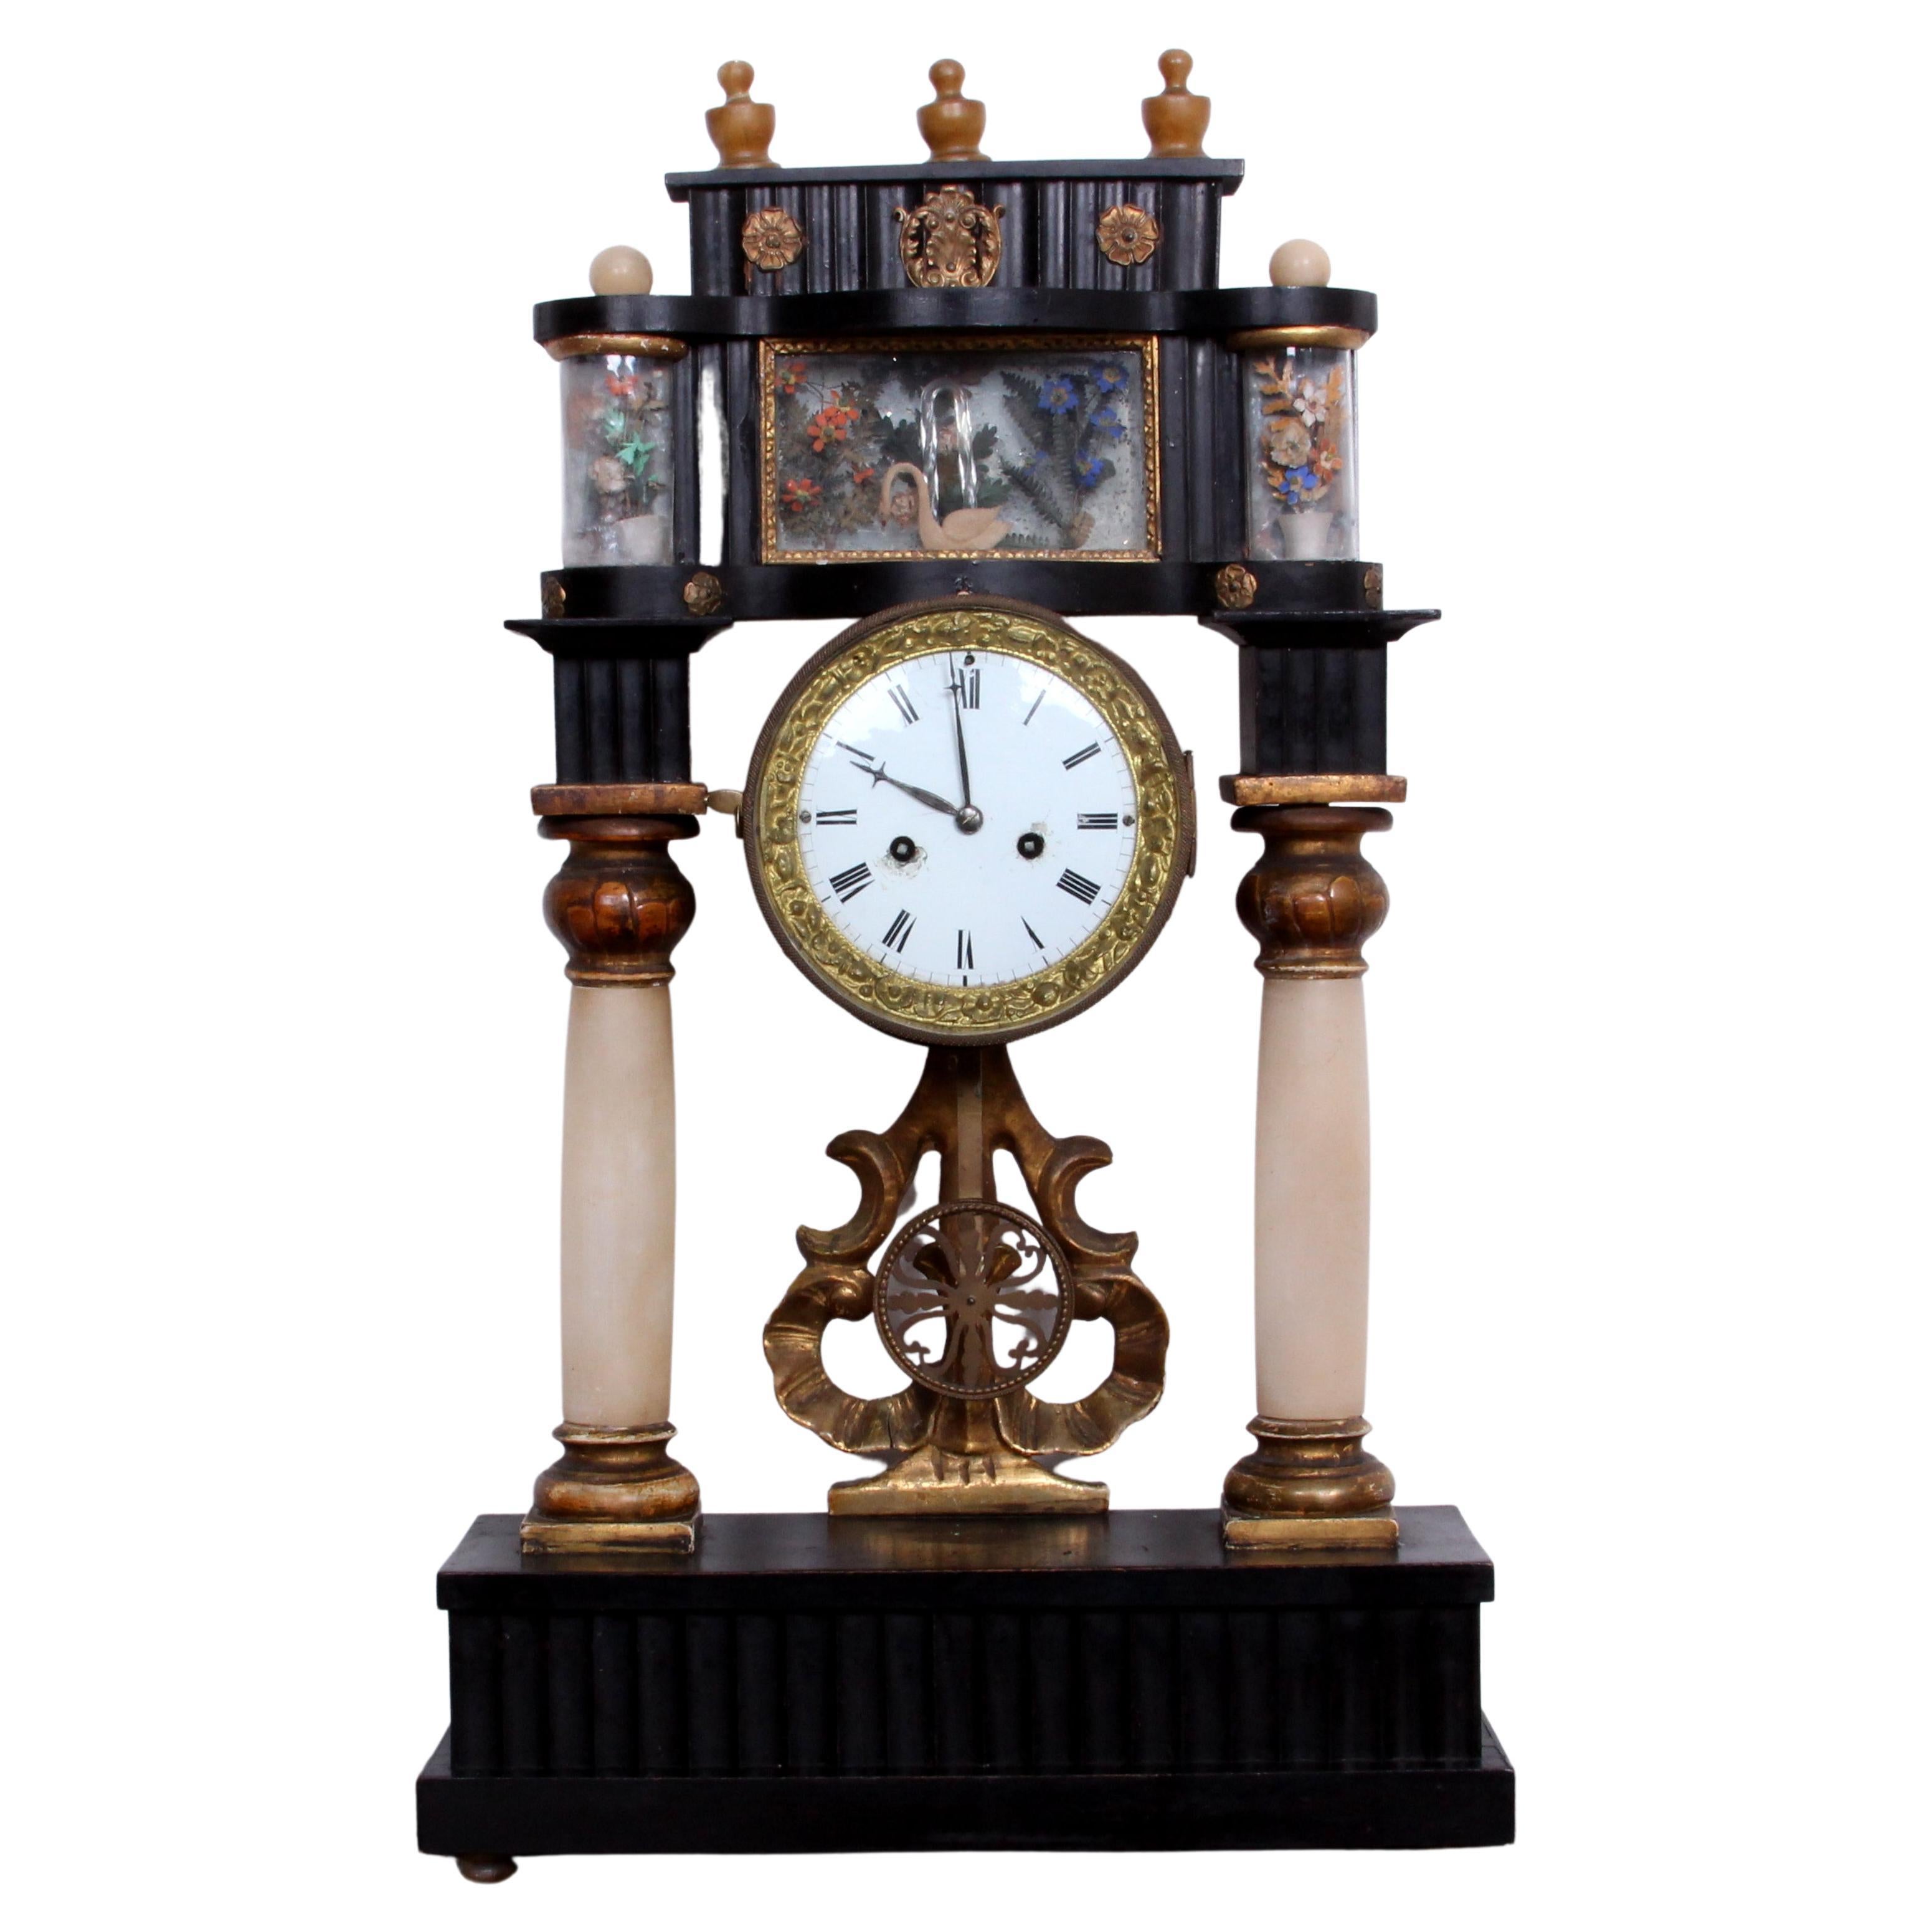 Wiener Säulen-Uhr Portal-Uhr Biedermeier-Ära Minenblumen-Schrank ar. 1840 